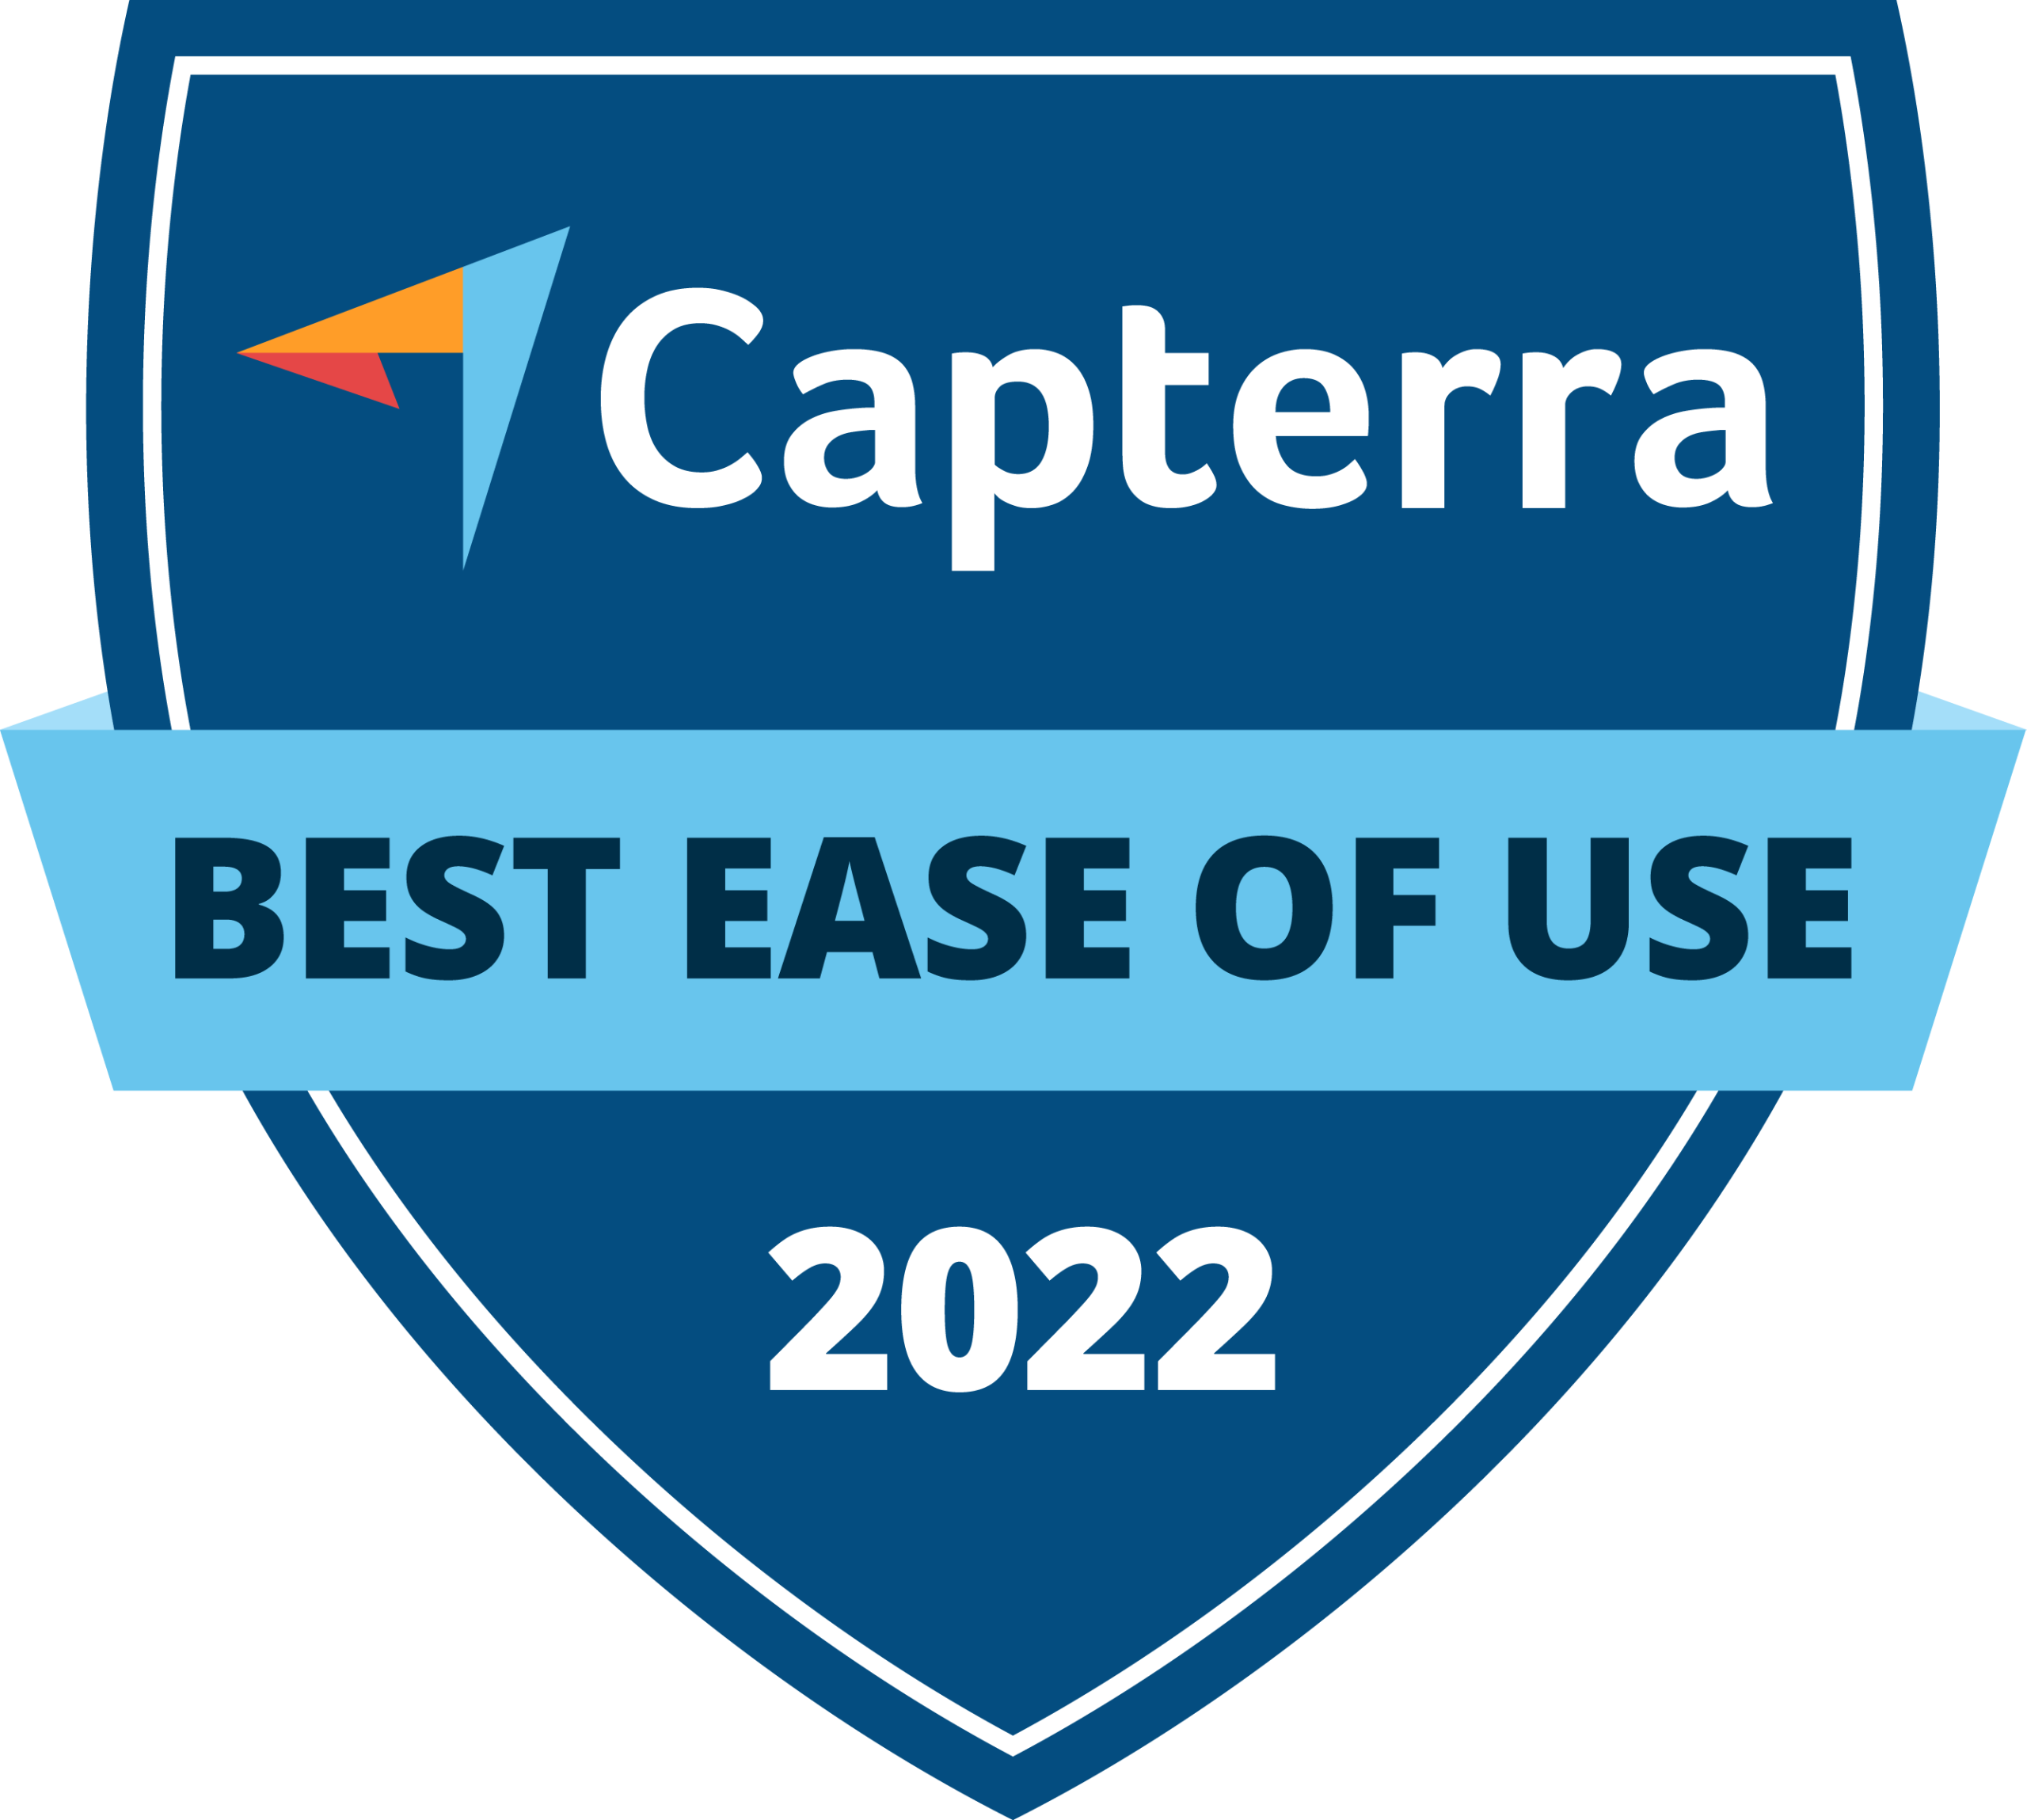 capterra best ease of use award 2022